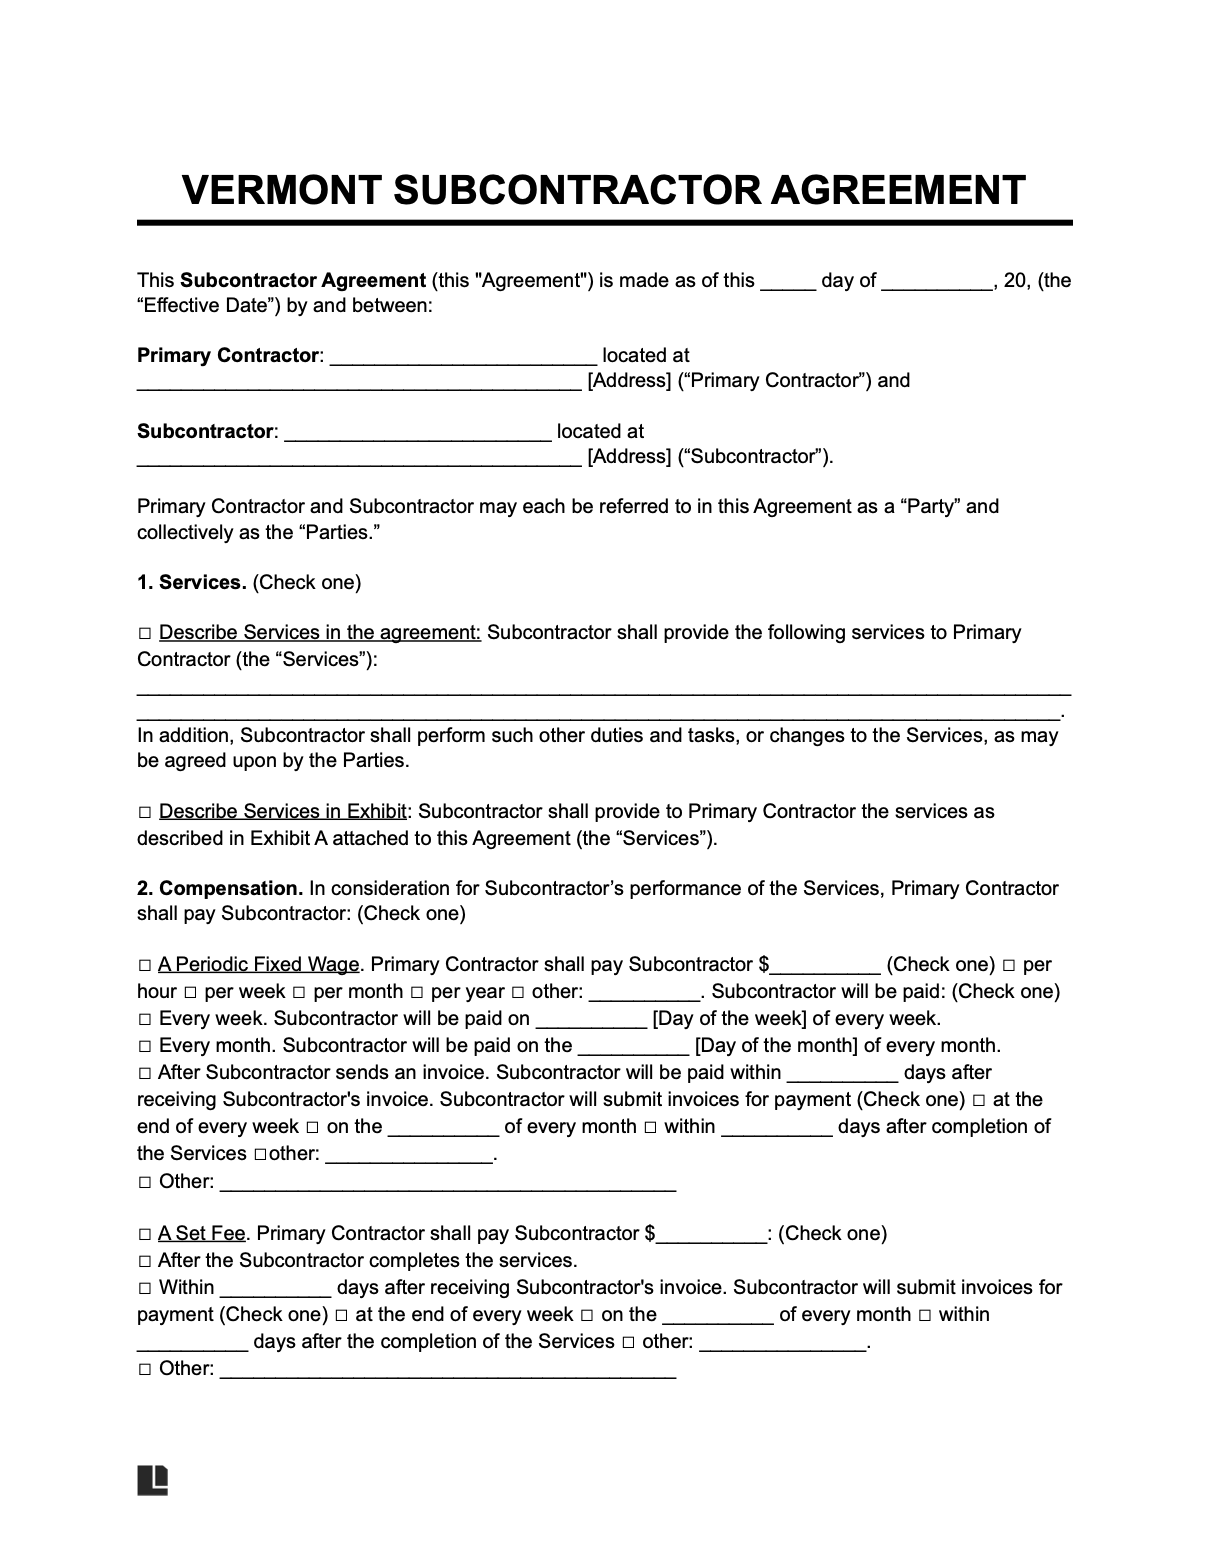 vermont subcontractor agreement template